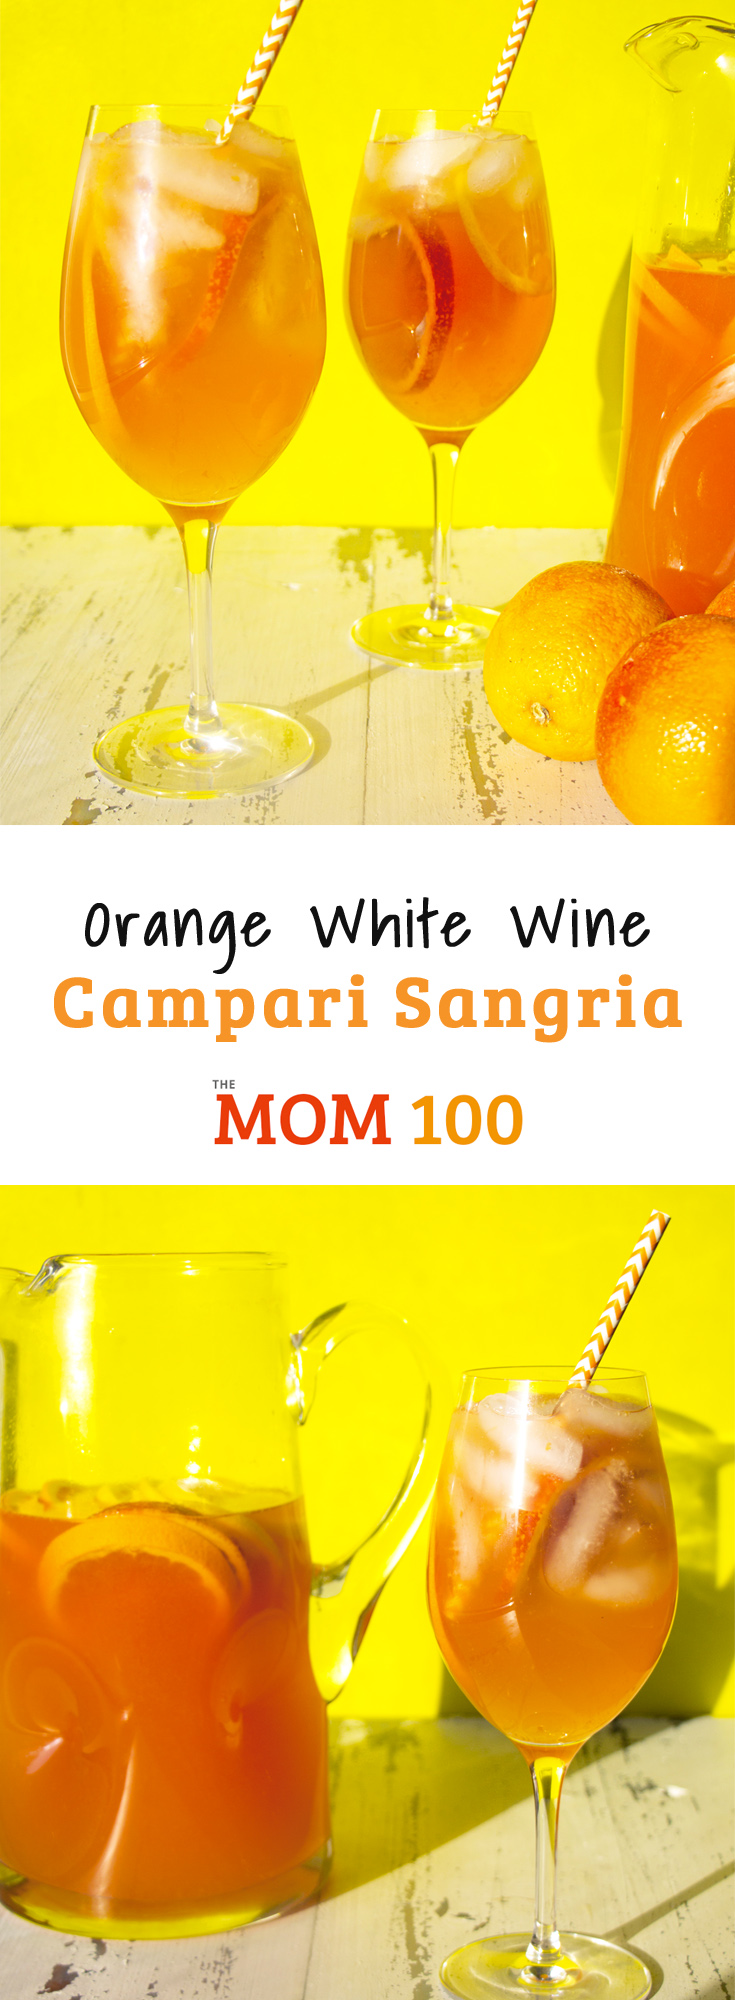 Orange White Wine Campari Sangria – The Mom 100 The Mom 100